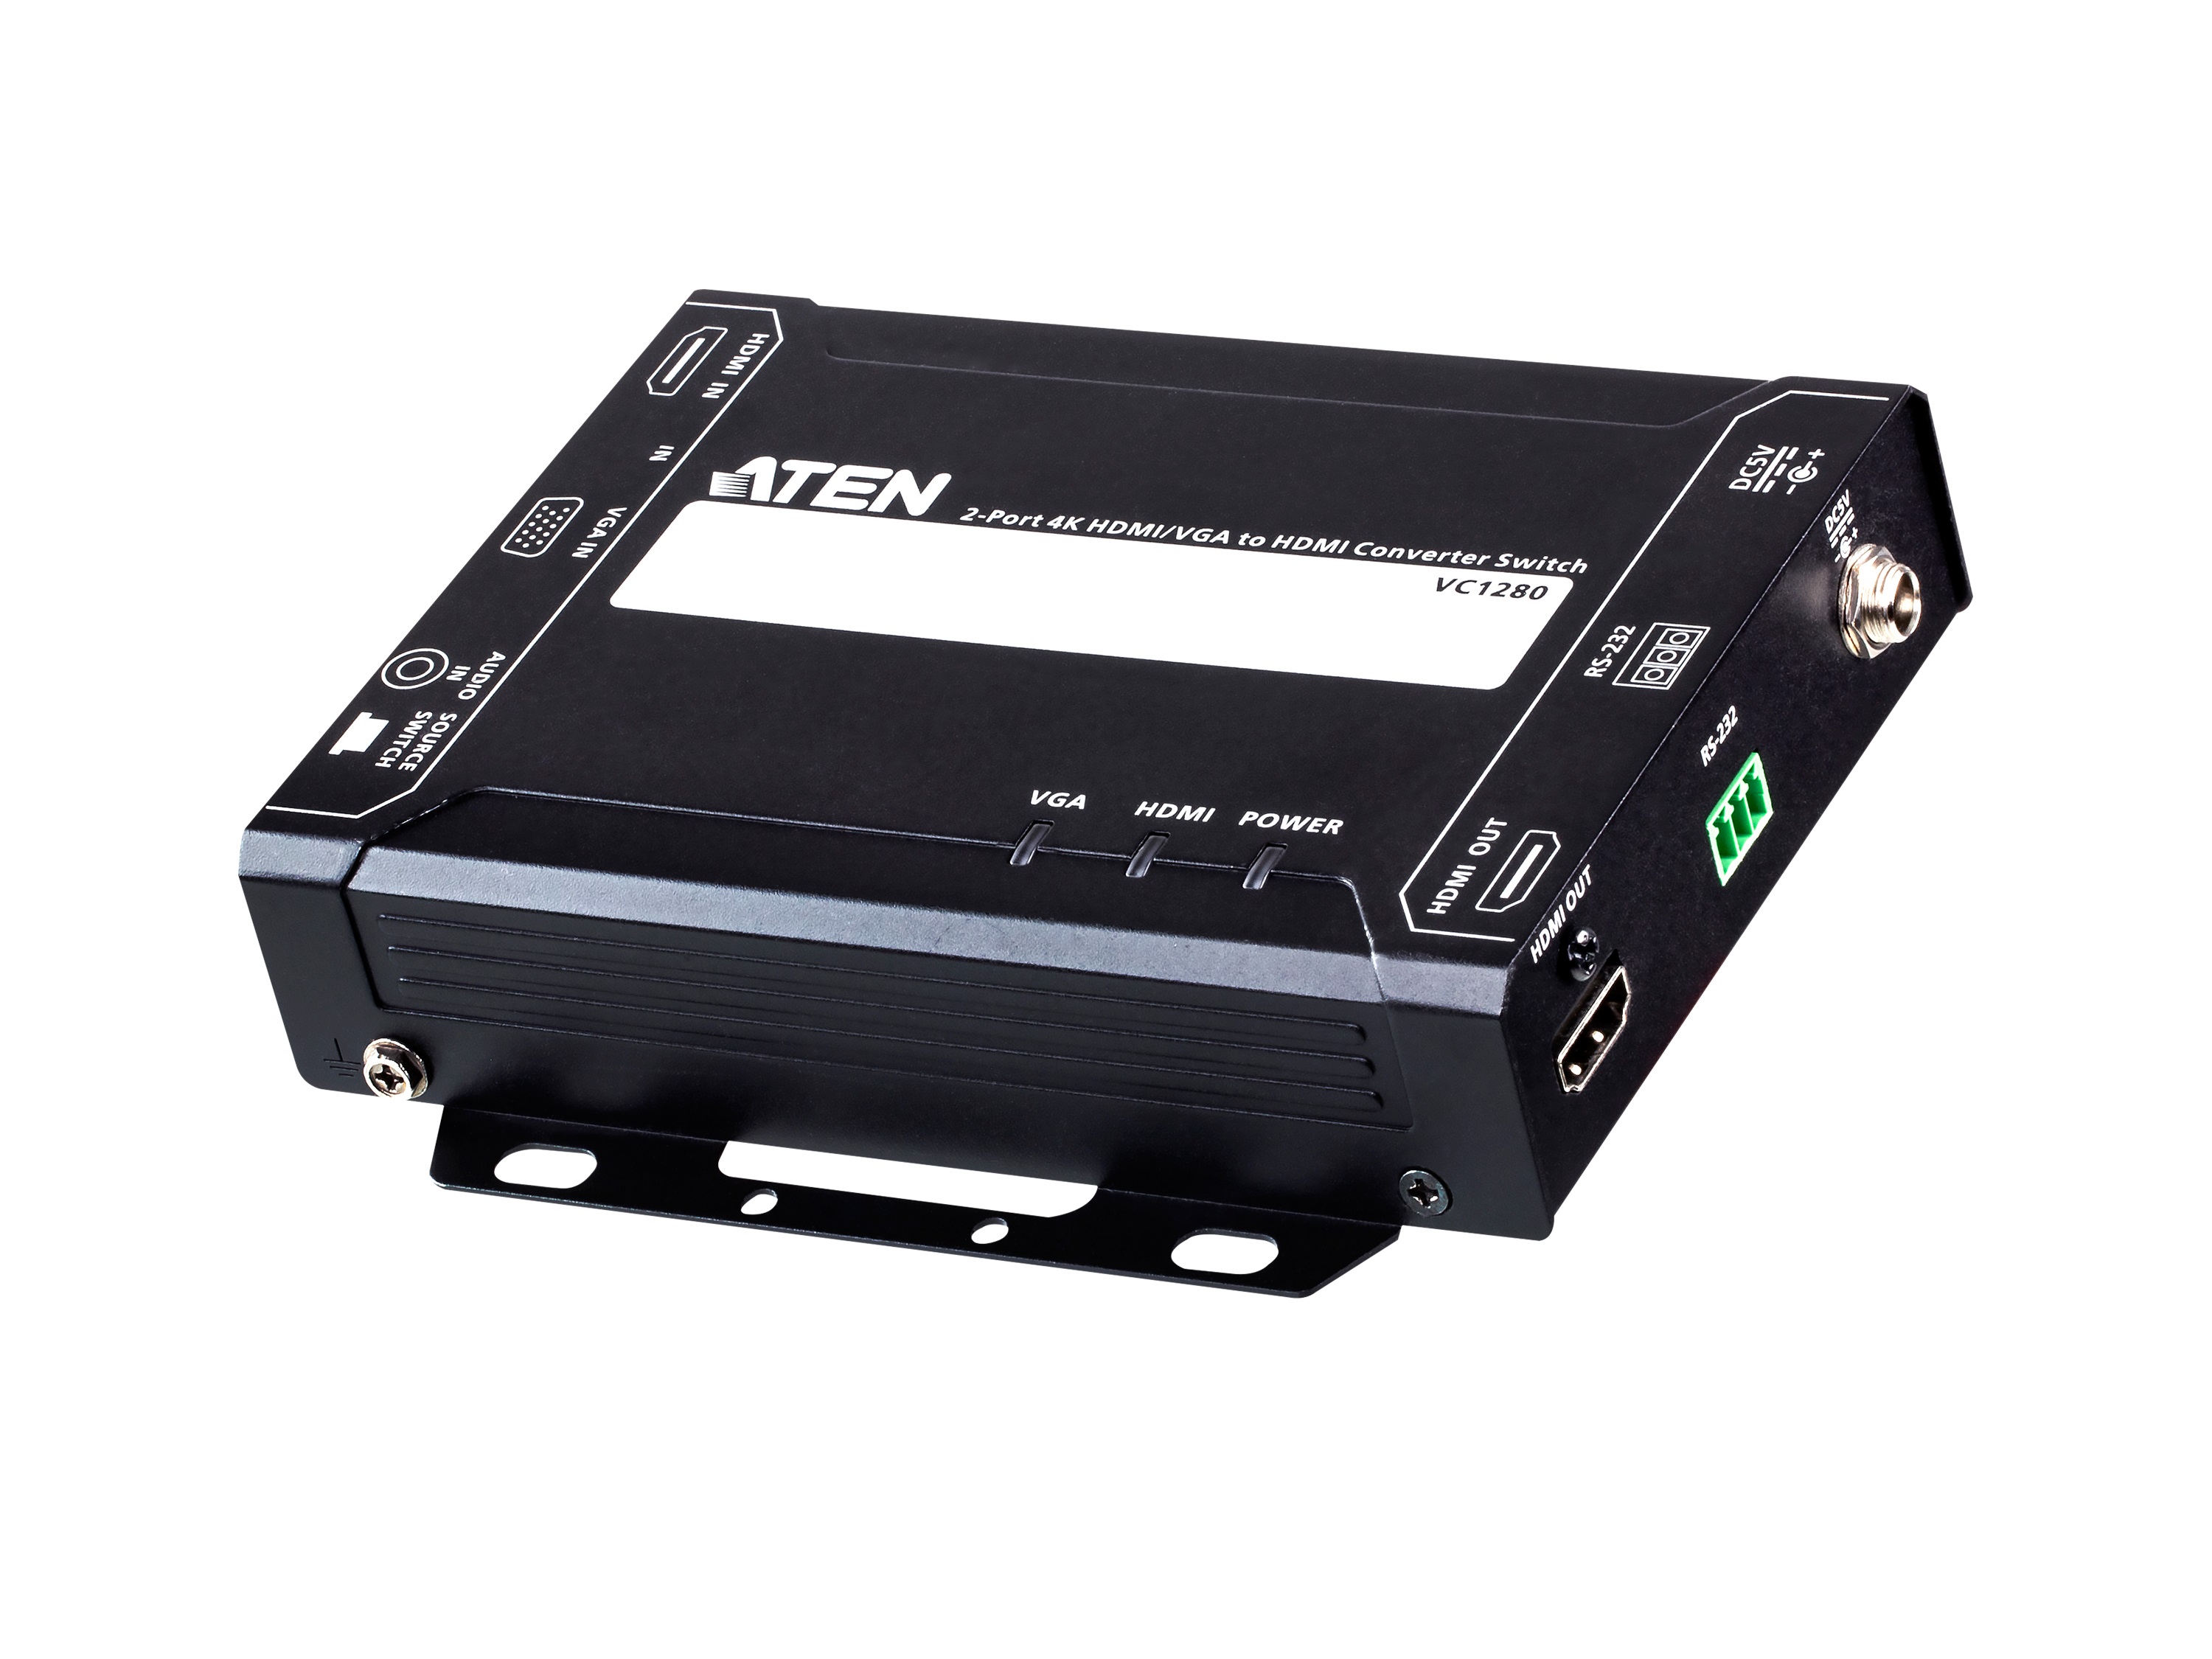 VC1280 2-Port 4K HDMI/VGA to HDMI Converter Switch by Aten